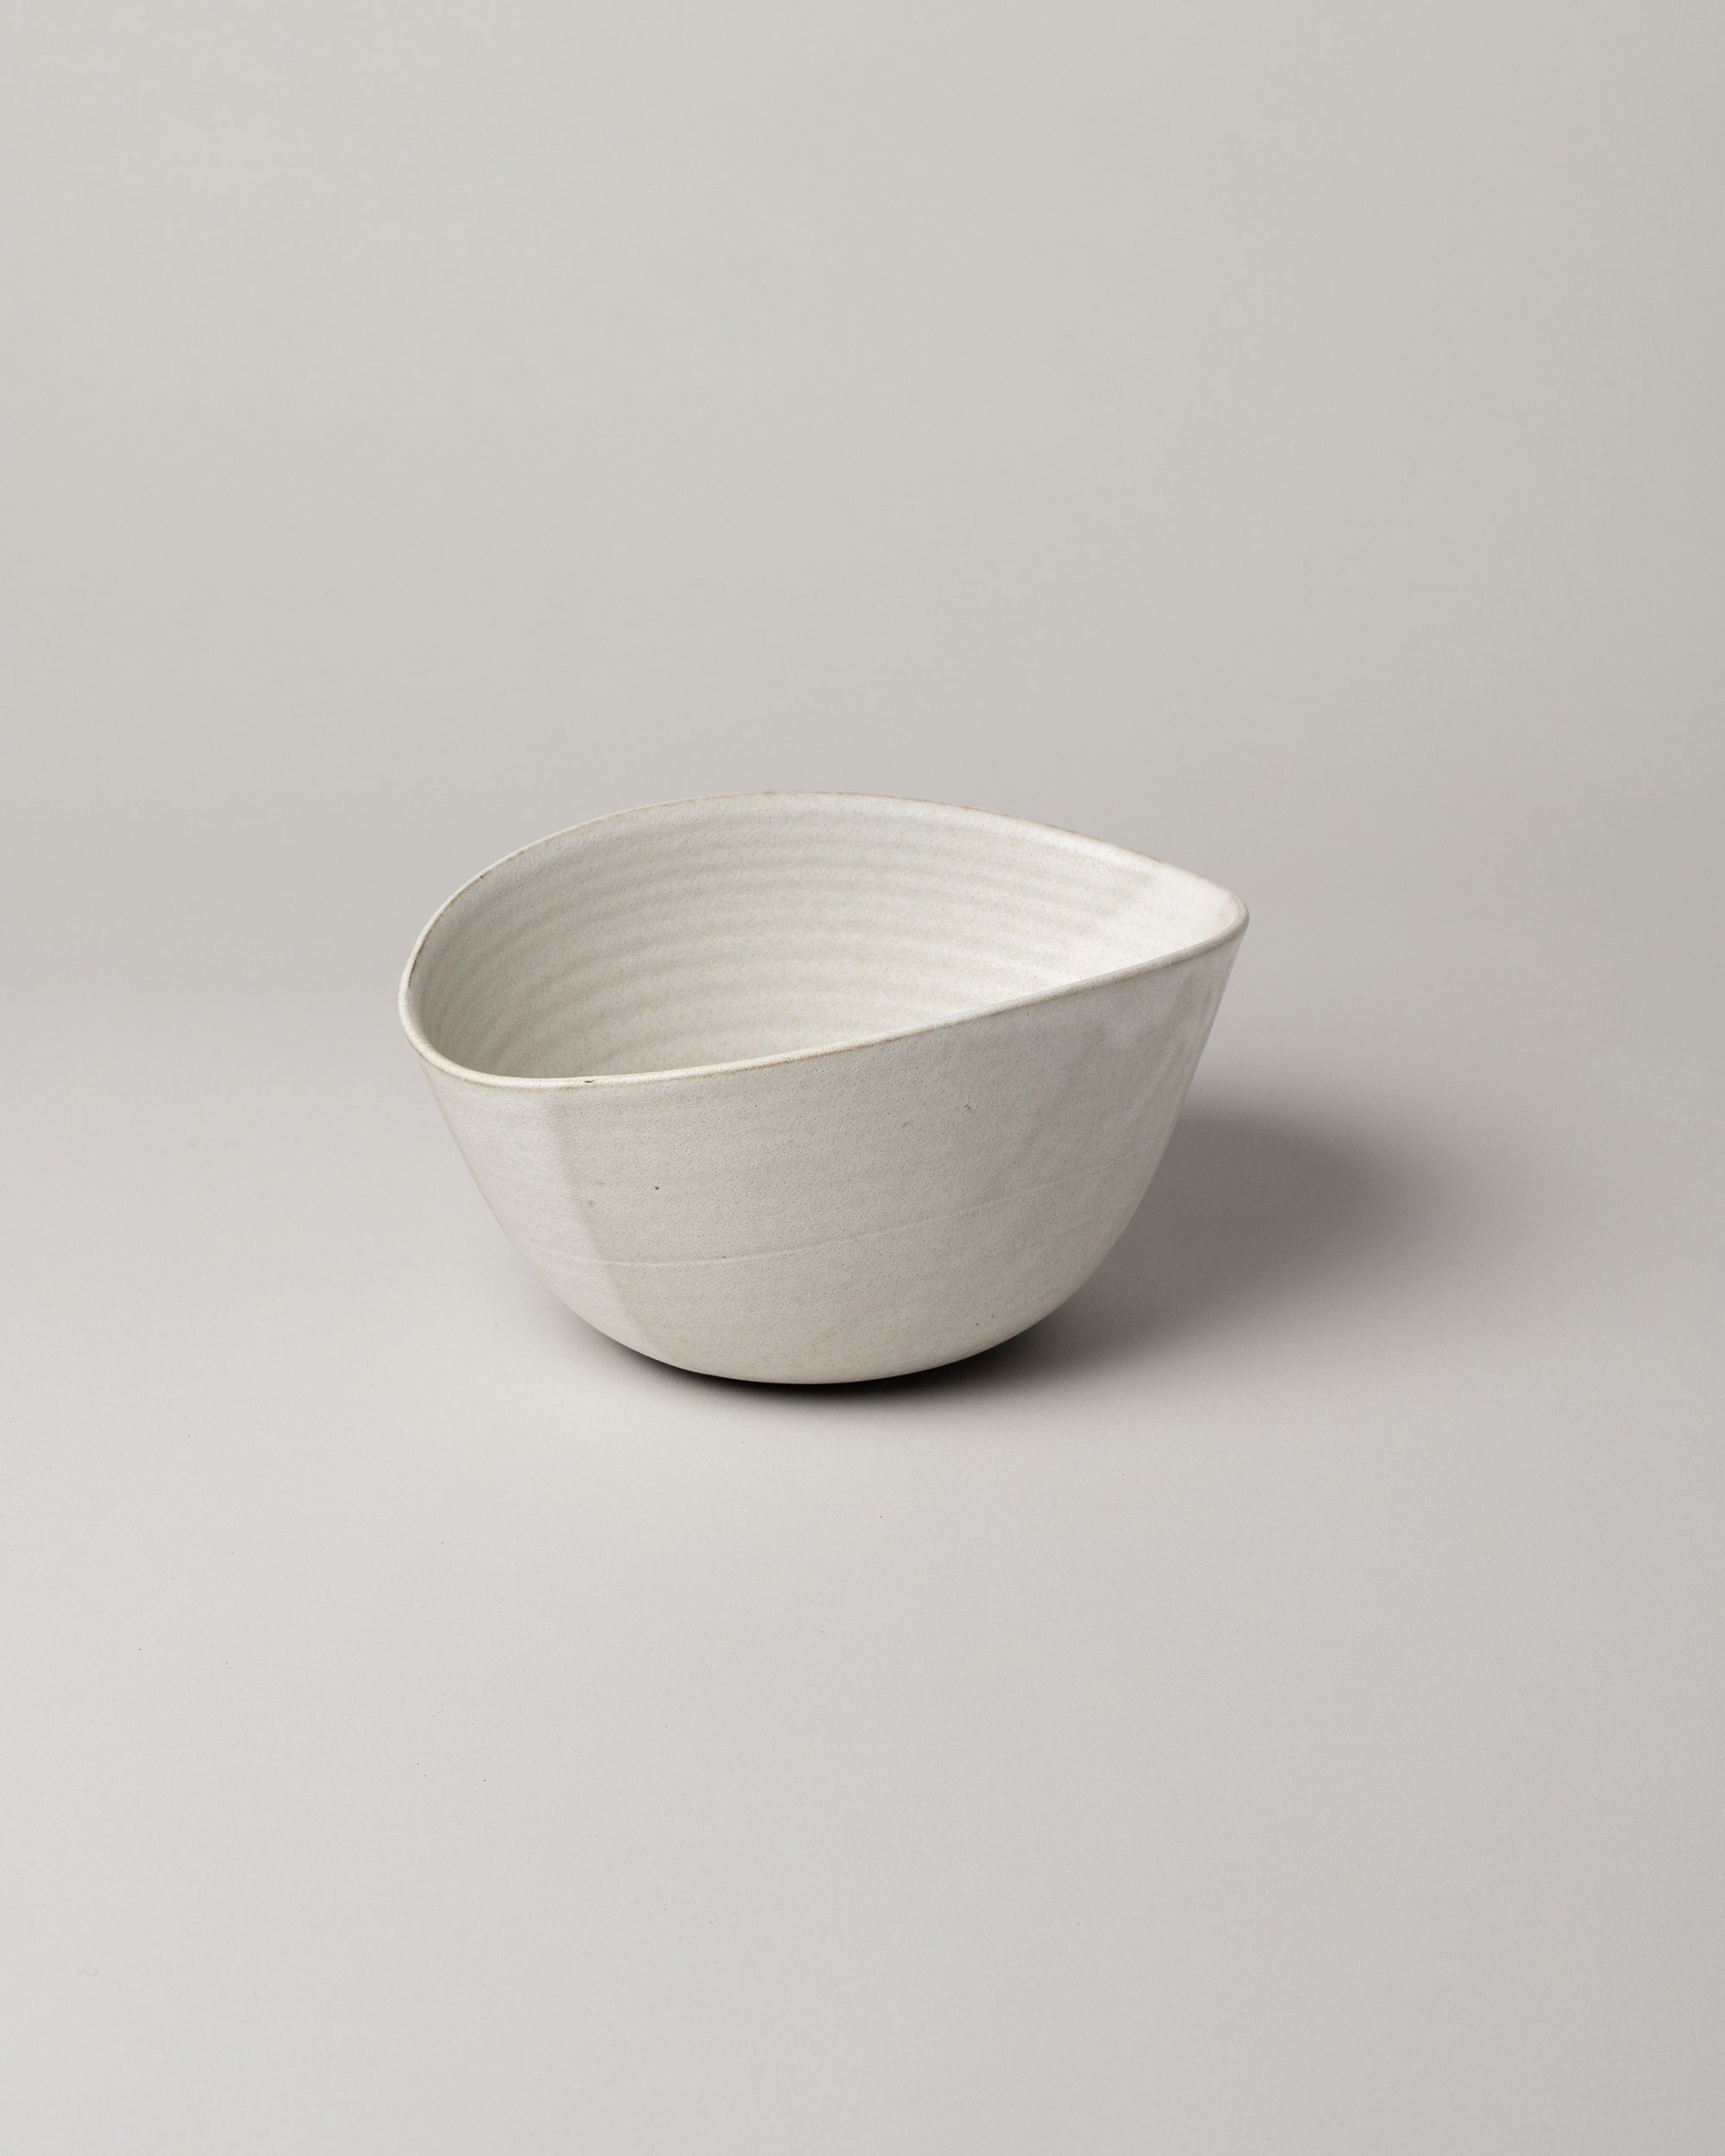 Small Ceramic Bowls Set Bowls Set of 2 Handmade Pottery and Ceramics Small  Prep Bowls Jewelry Dish Small Bowls Ring Dishes 